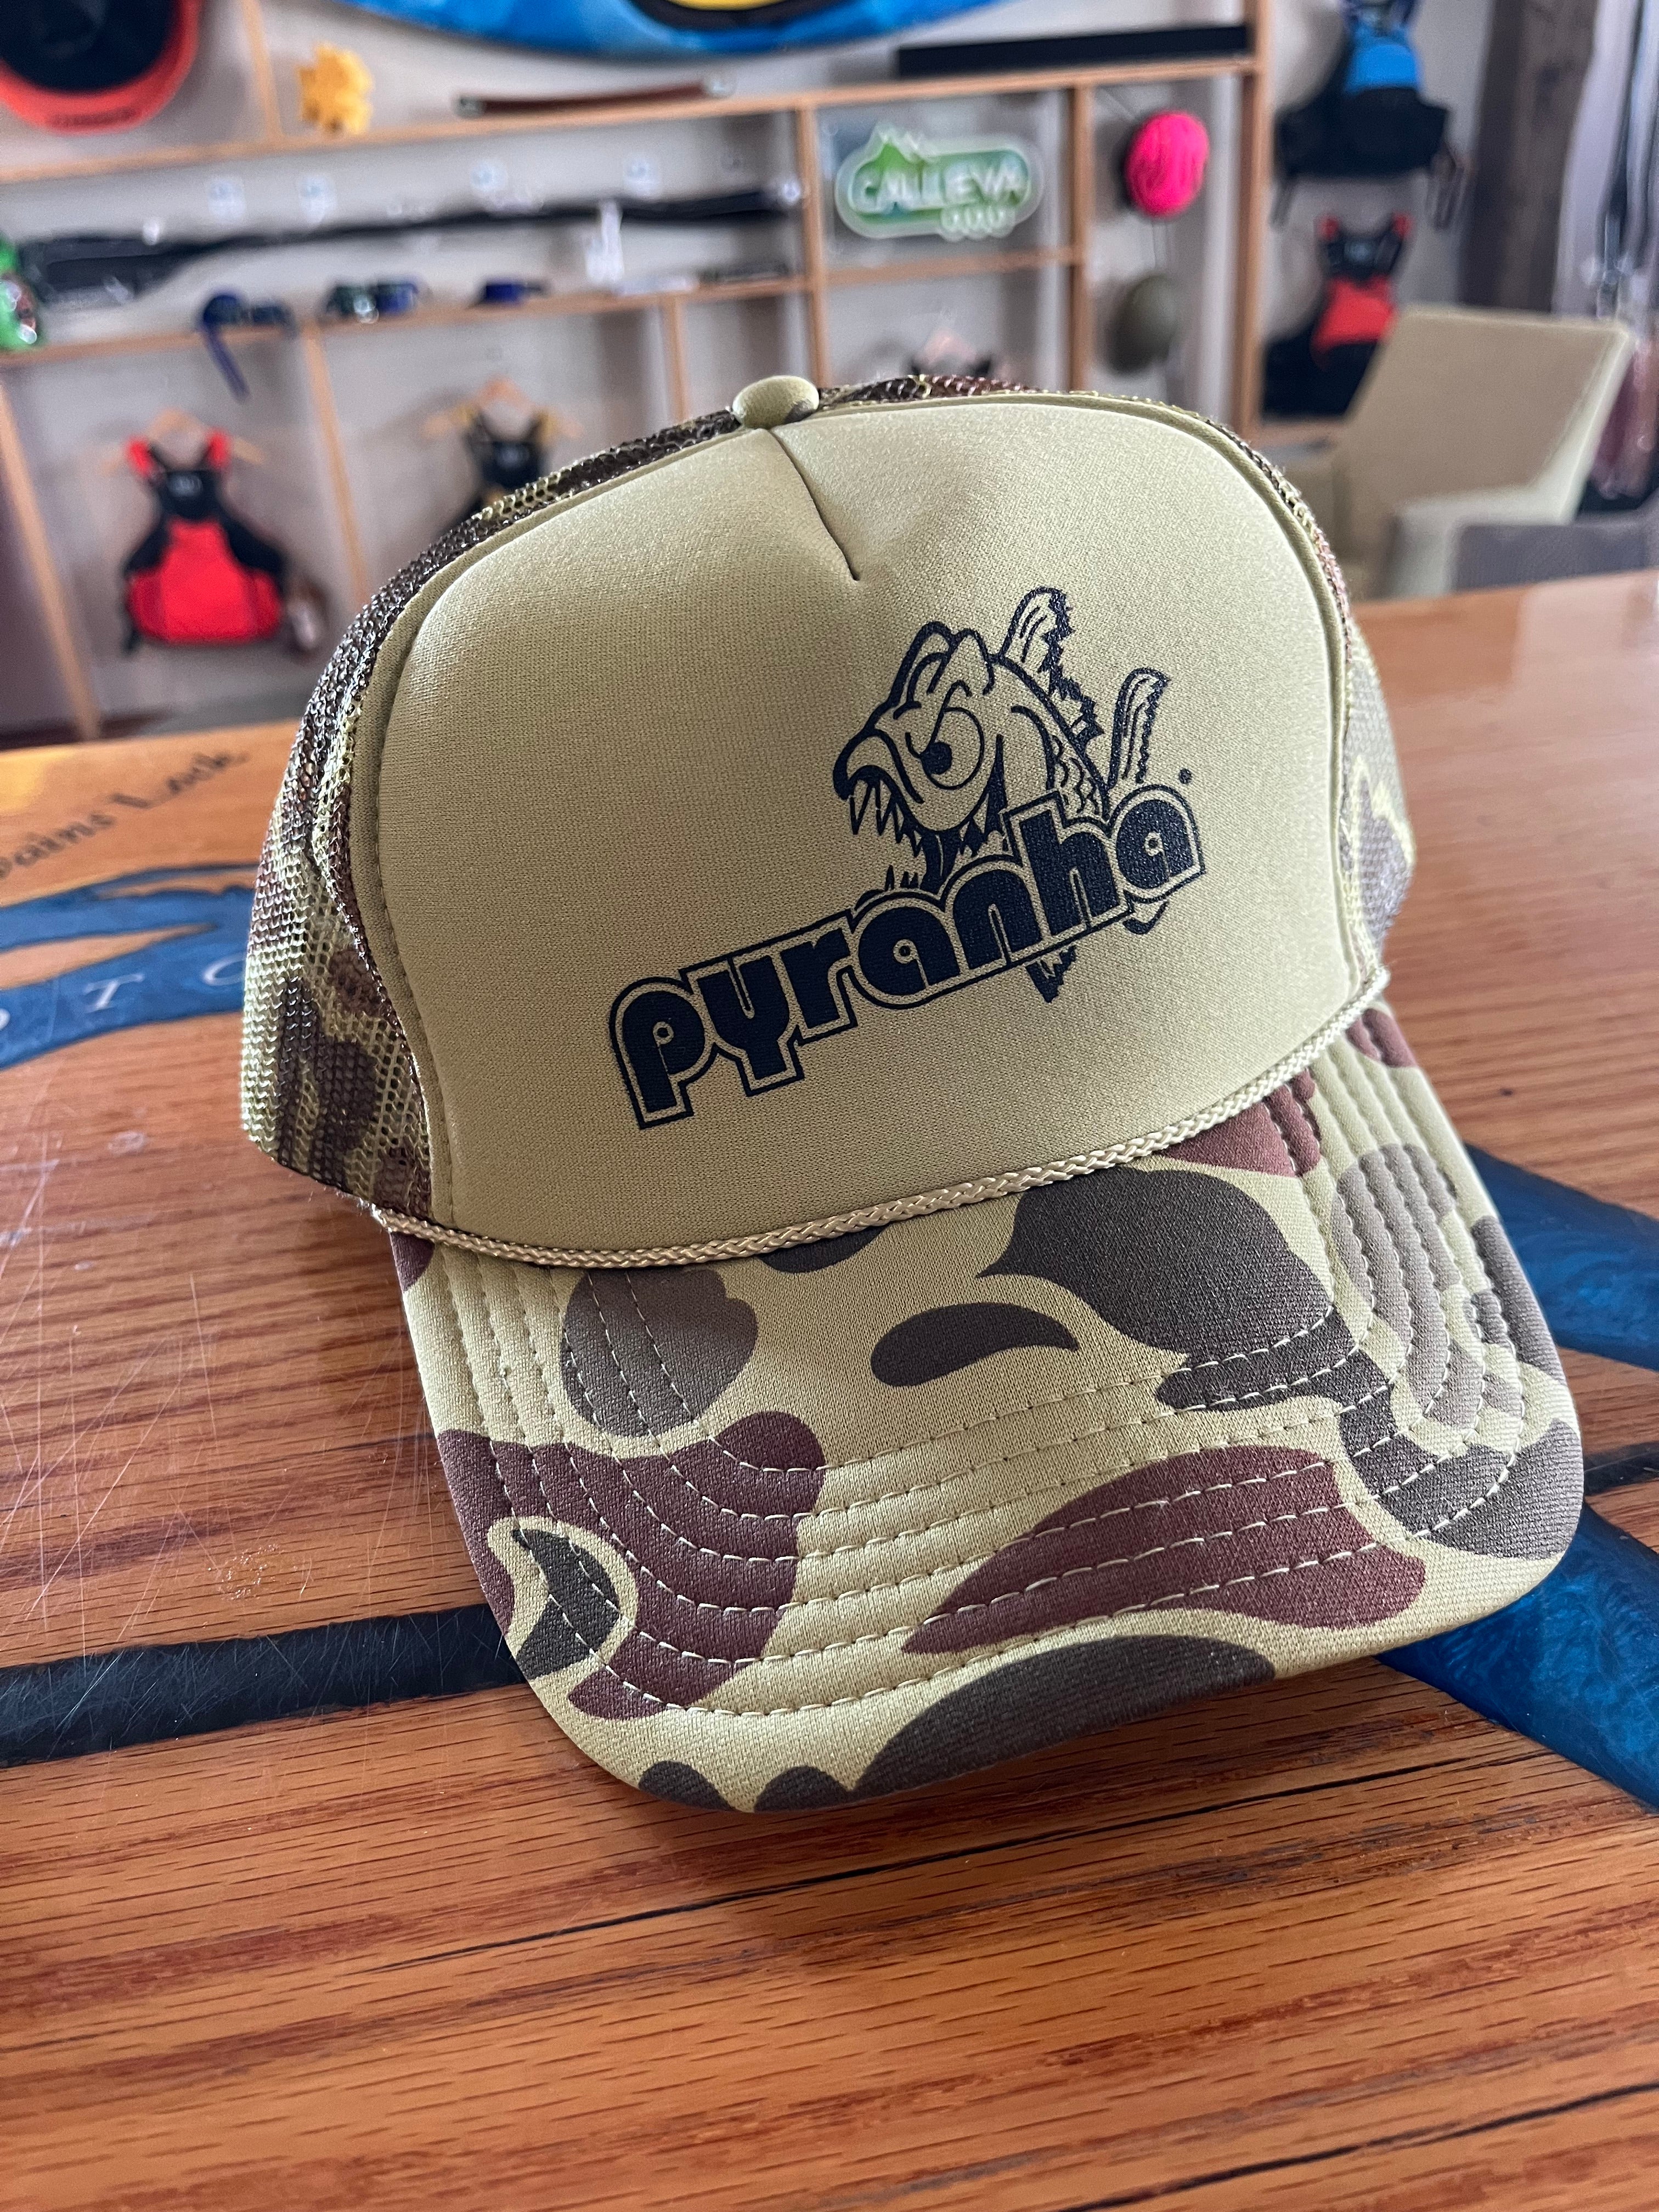 Pyranha Hat